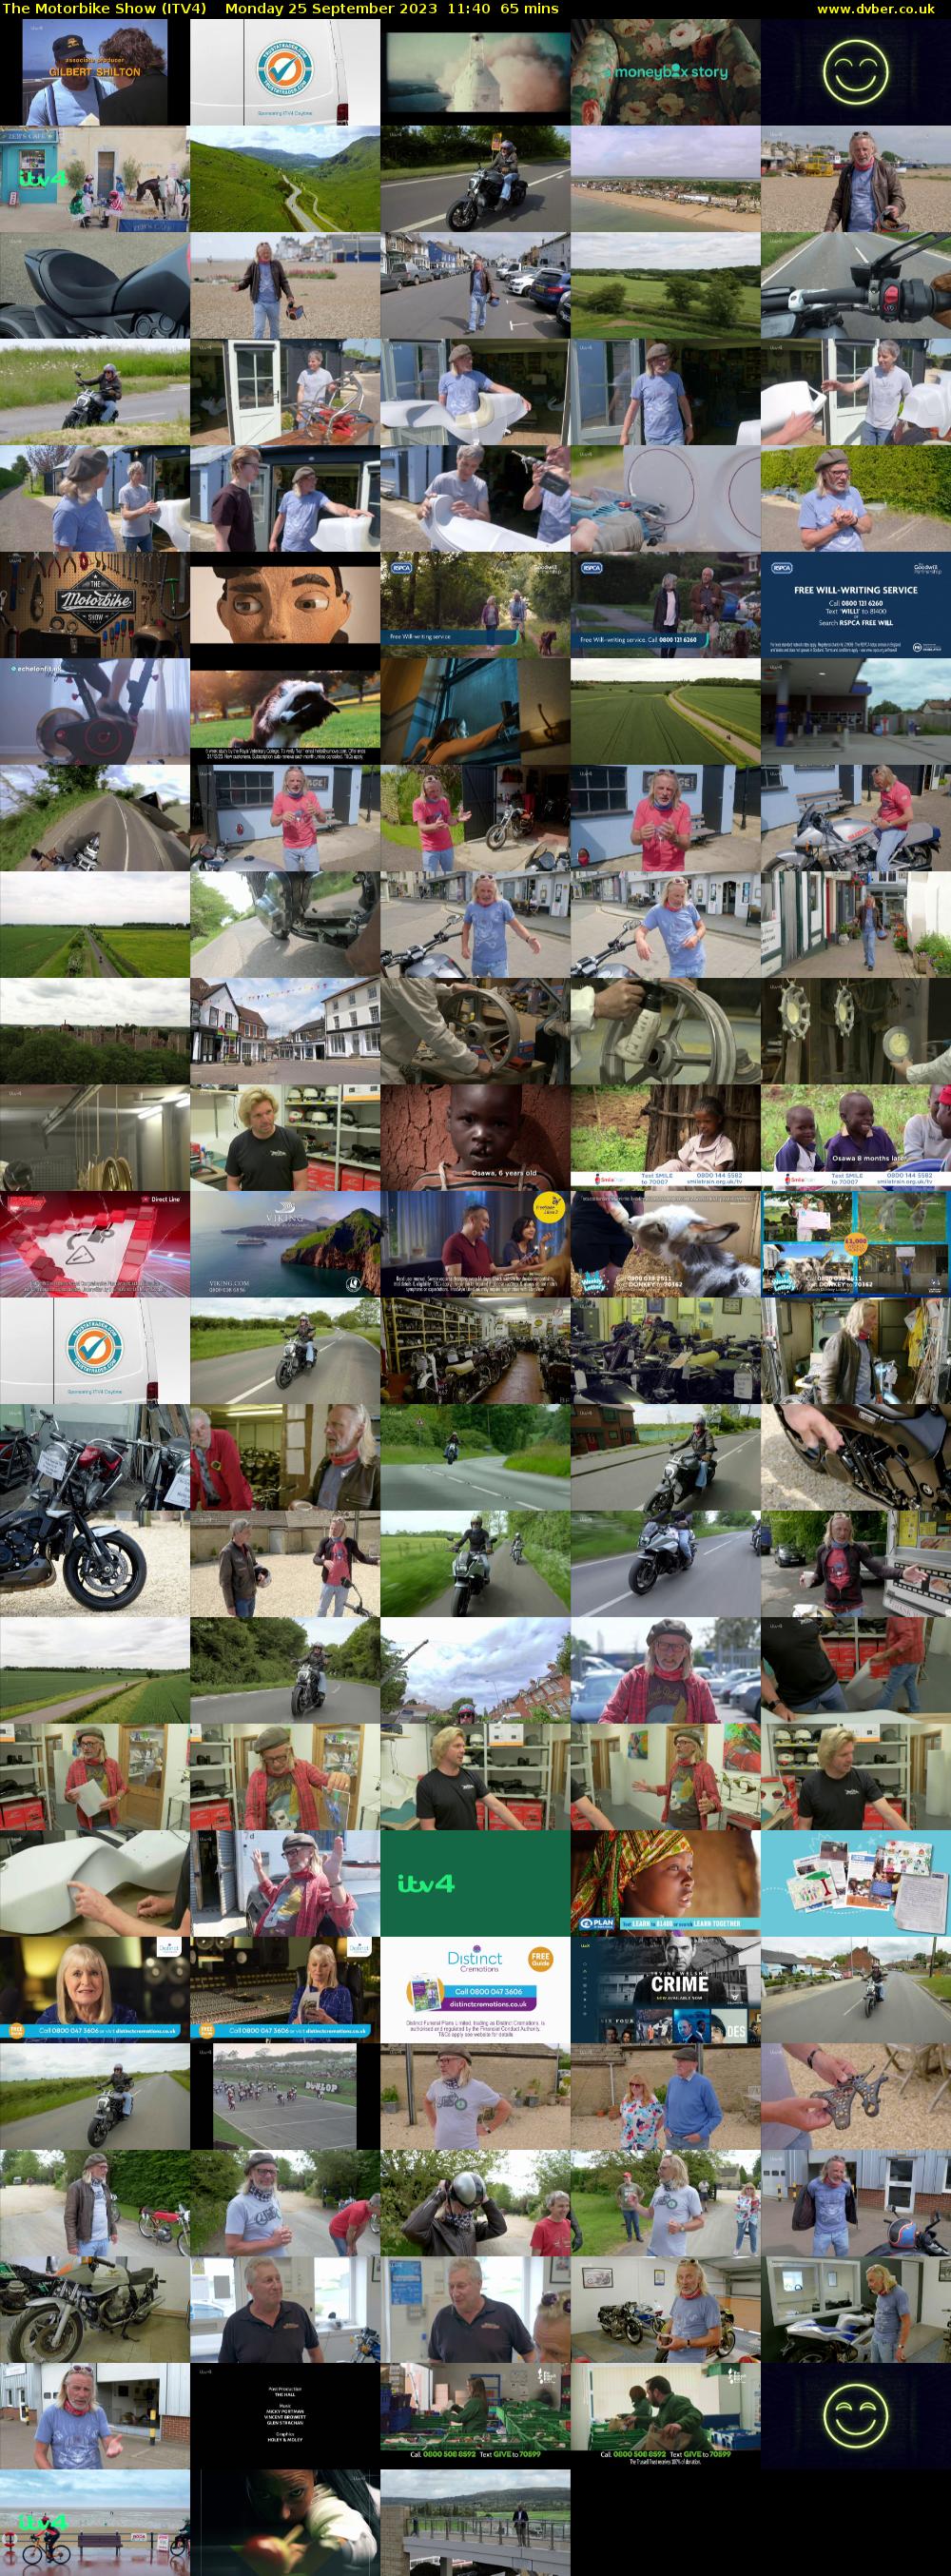 The Motorbike Show (ITV4) Monday 25 September 2023 11:40 - 12:45